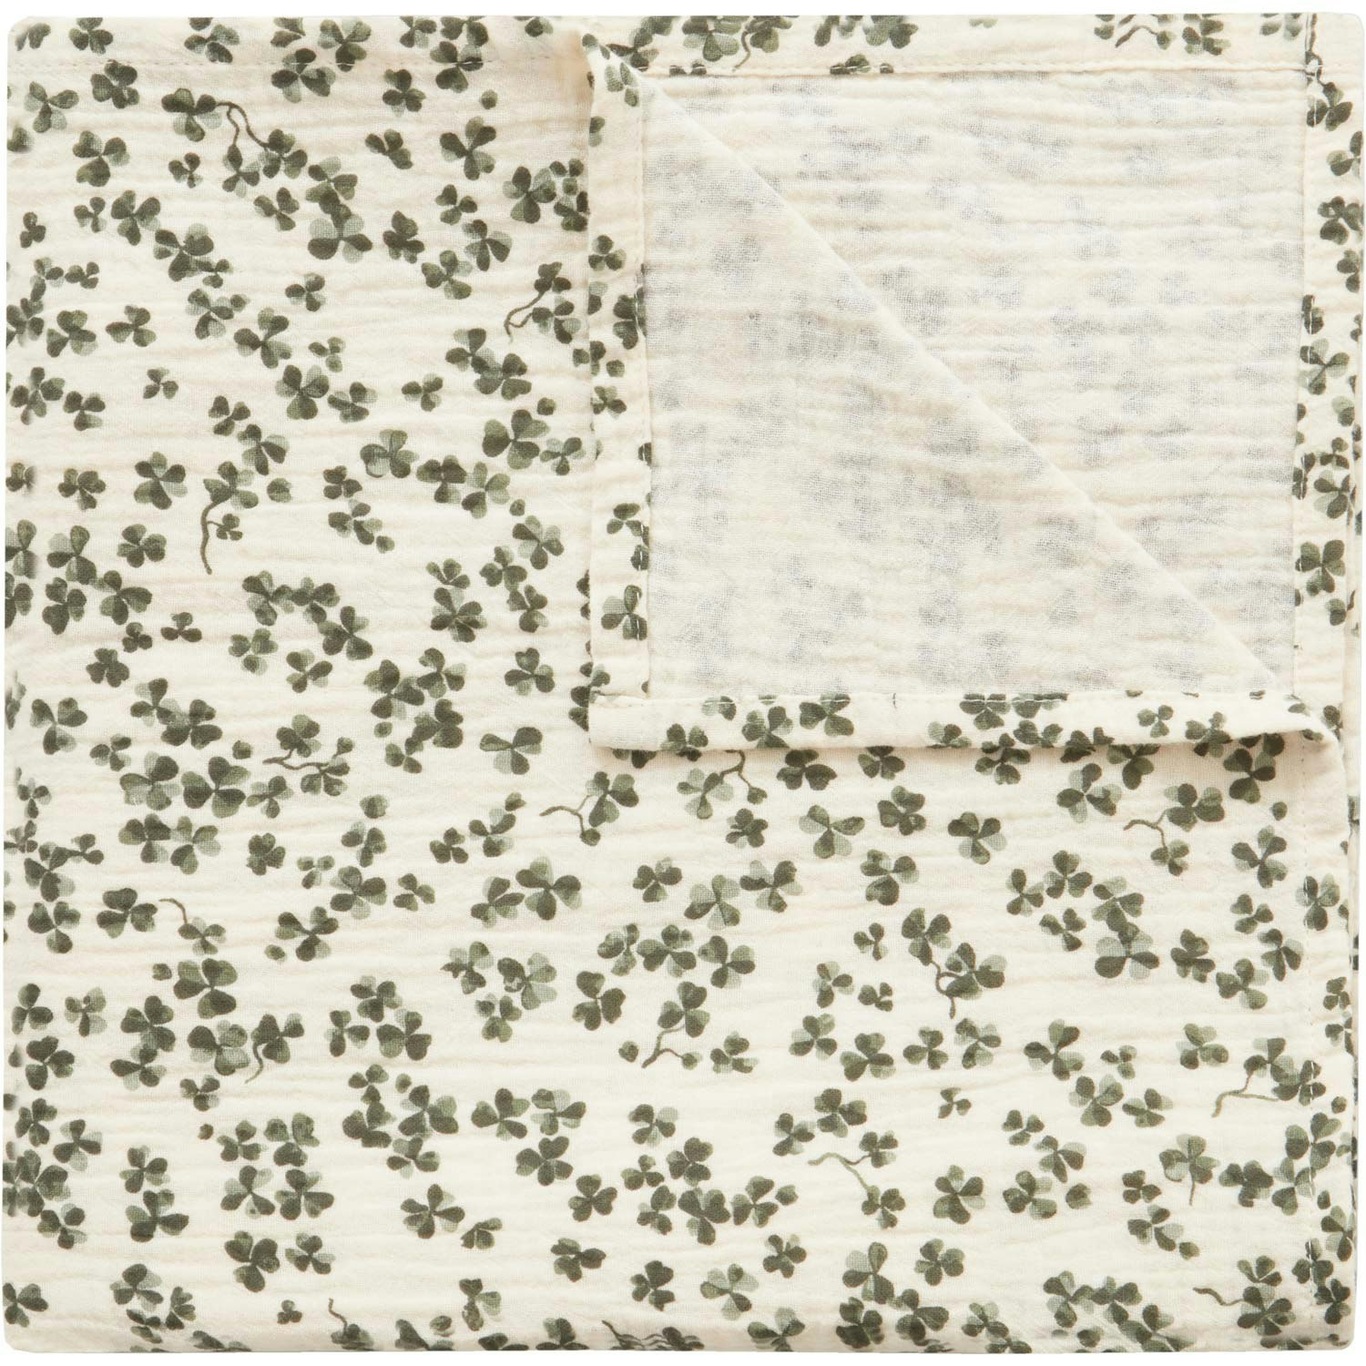 Sorrel Ecru Muslin Swaddle Blanket, 110x110 cm